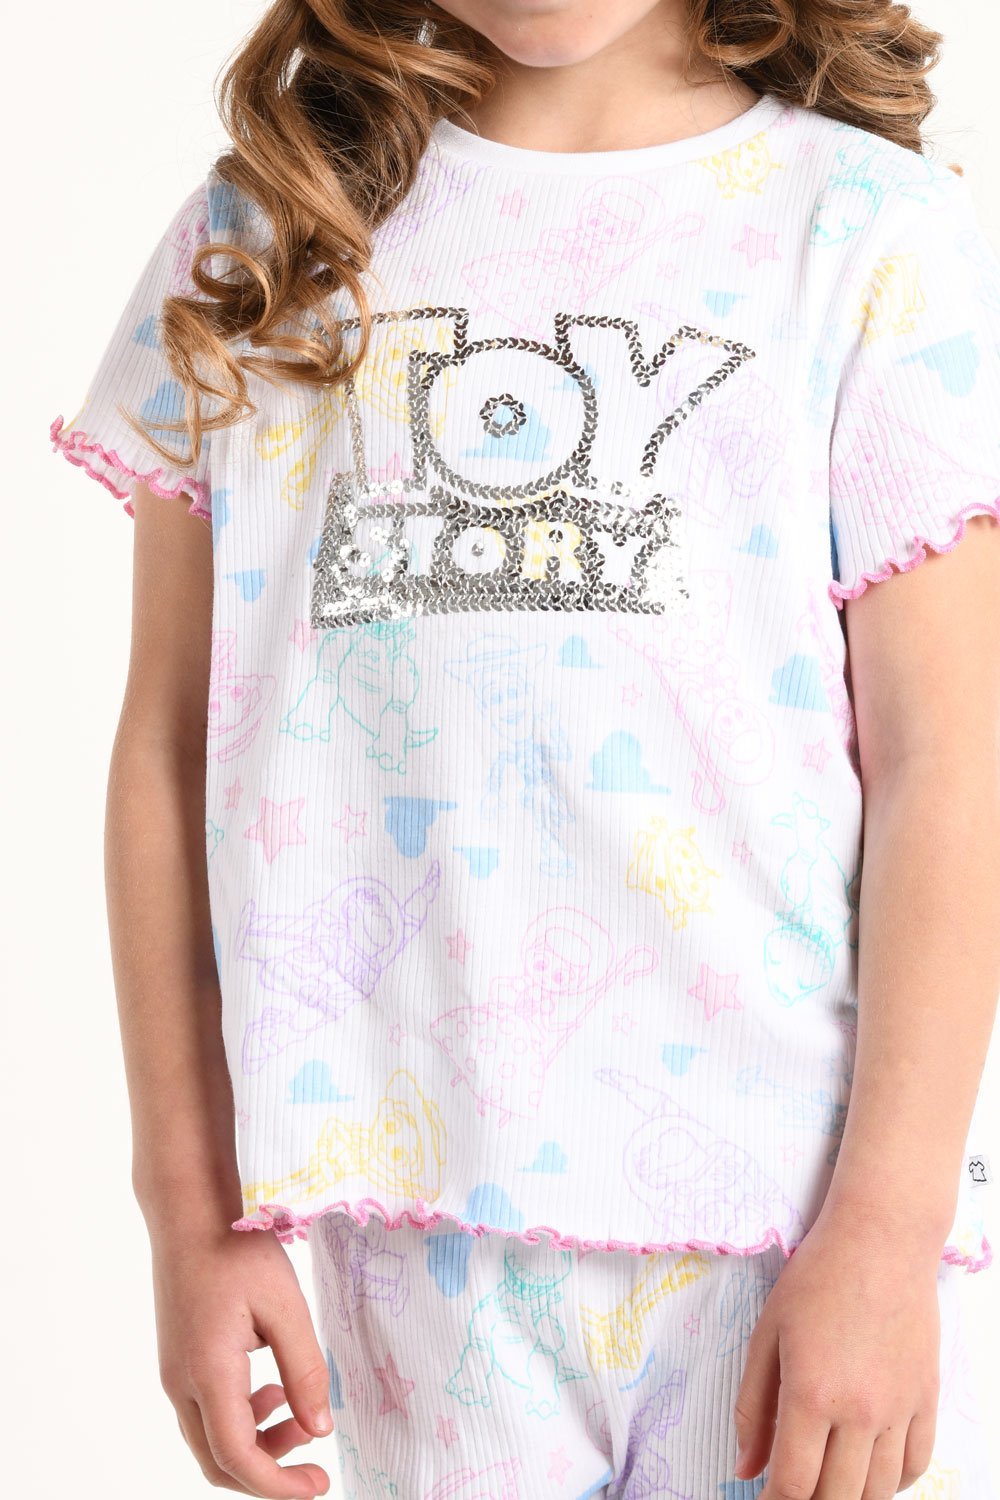 Disney Toy Story Girls Pyjamas - Brand Threads